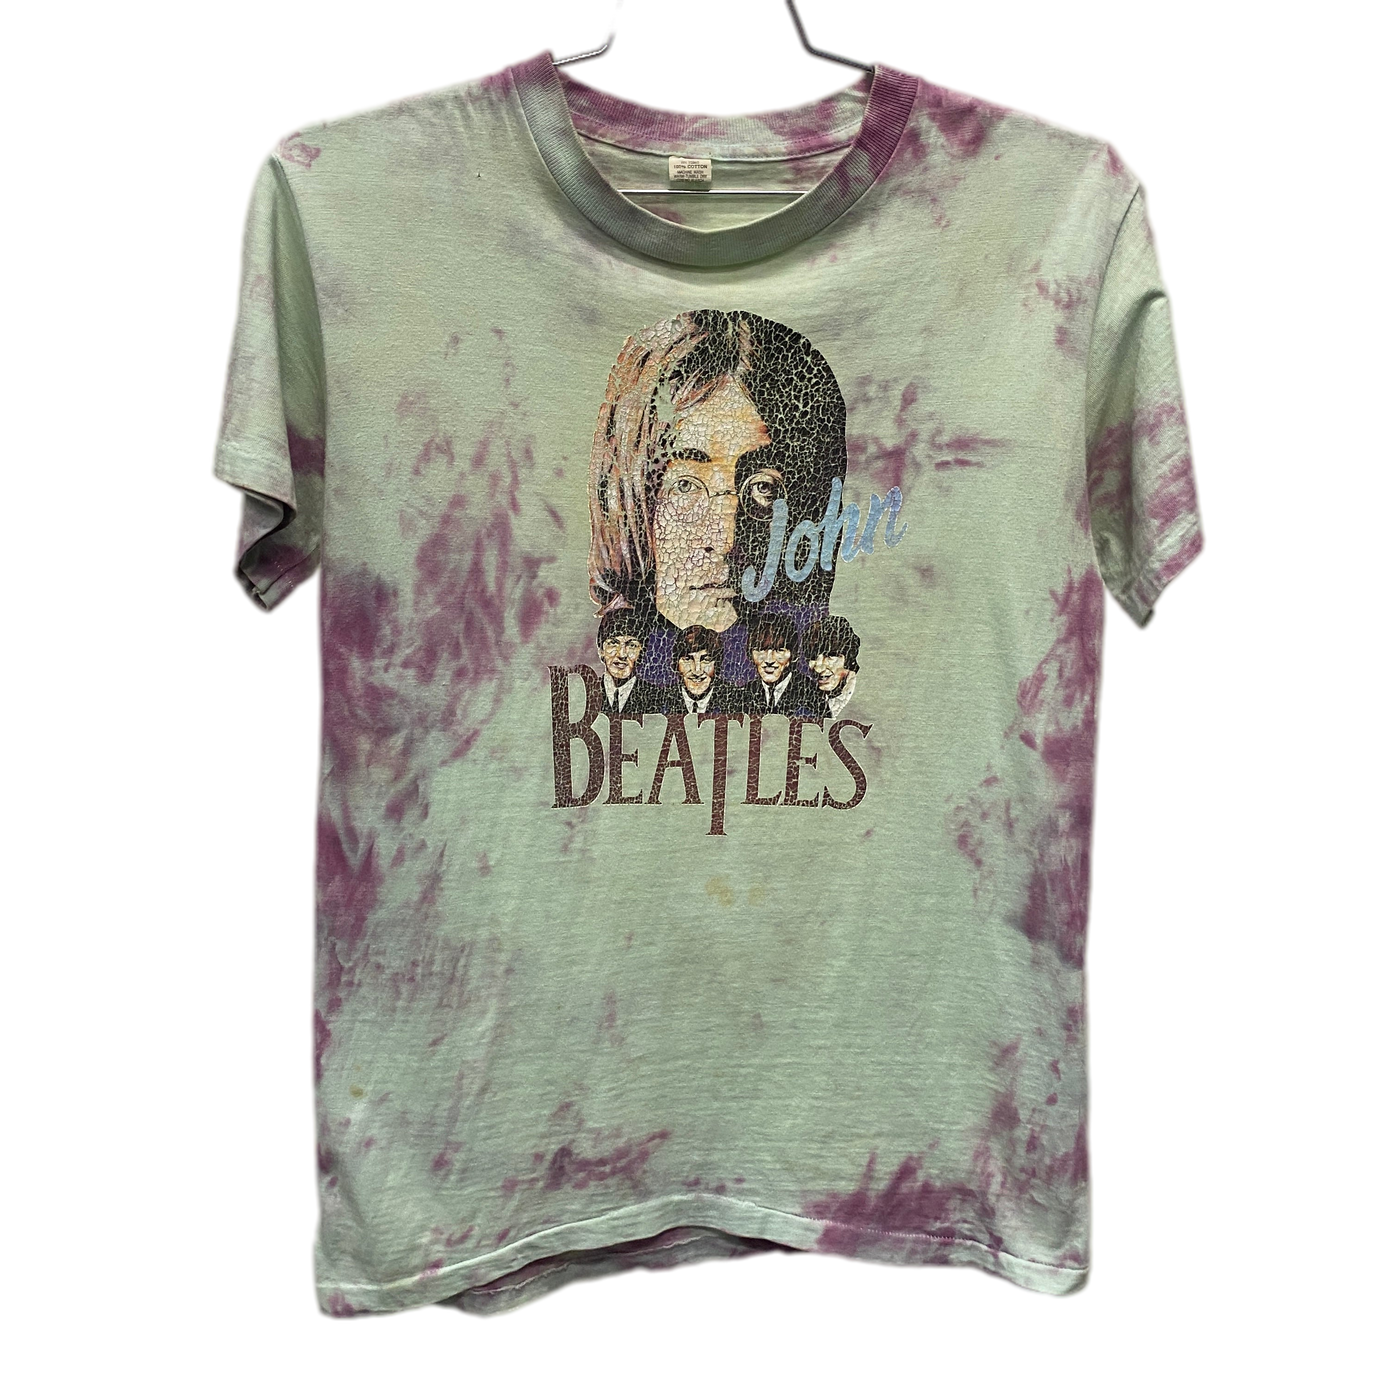 60's John Lennon Beatles Tie Dye Music T-Shirt sz M